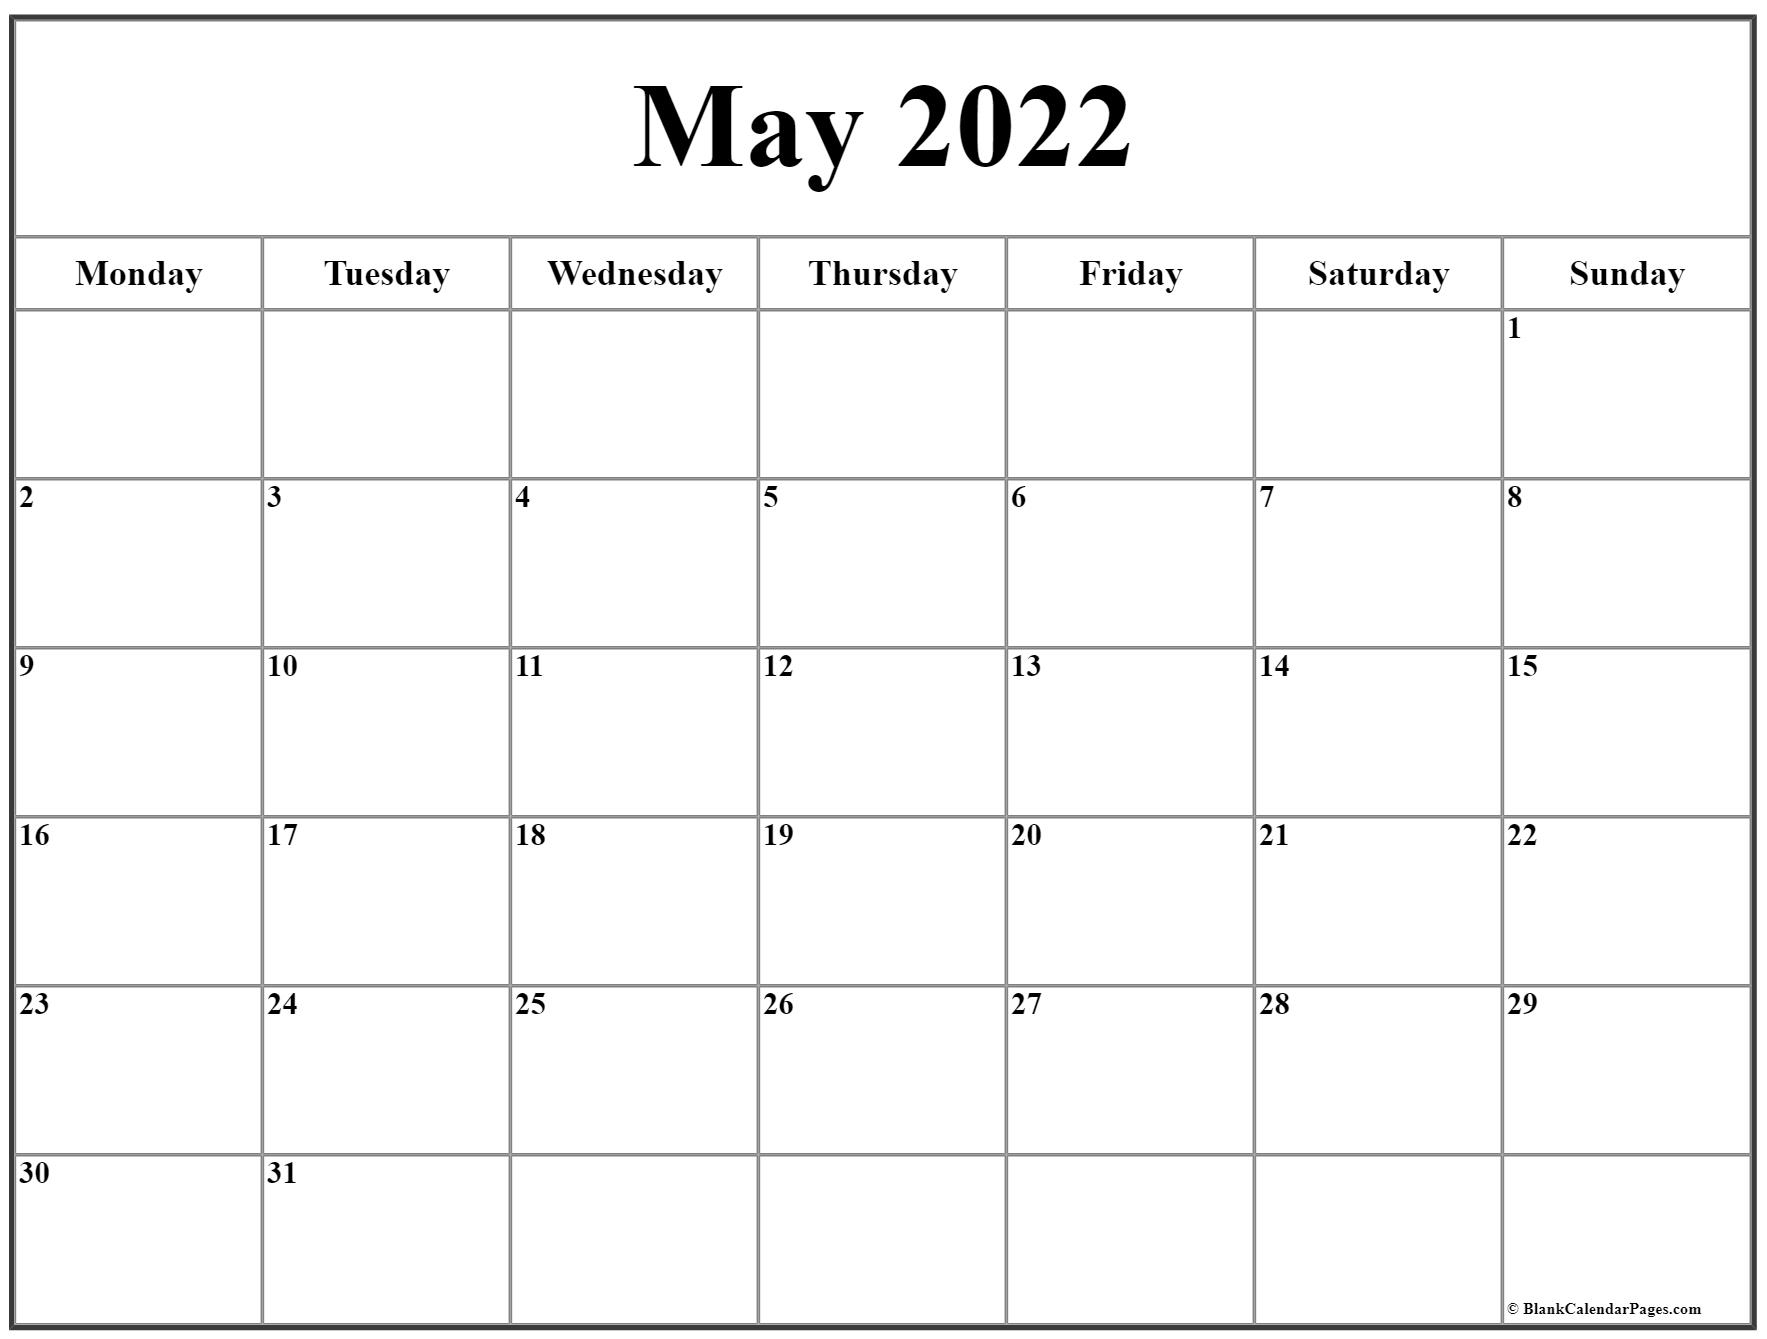 Get Calendar 2022 May Month